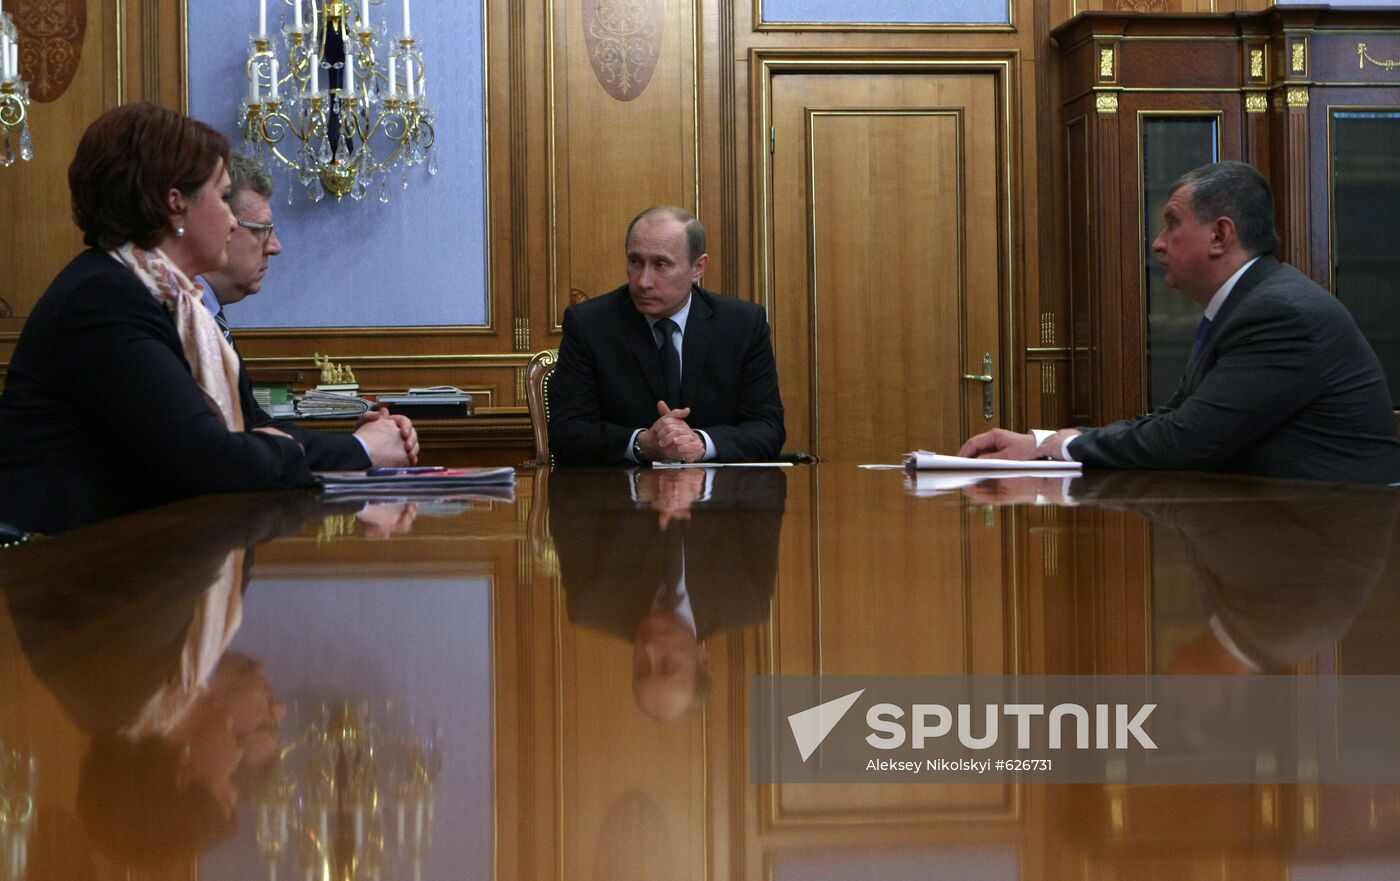 Vladimir Putin meets with Cabinet members